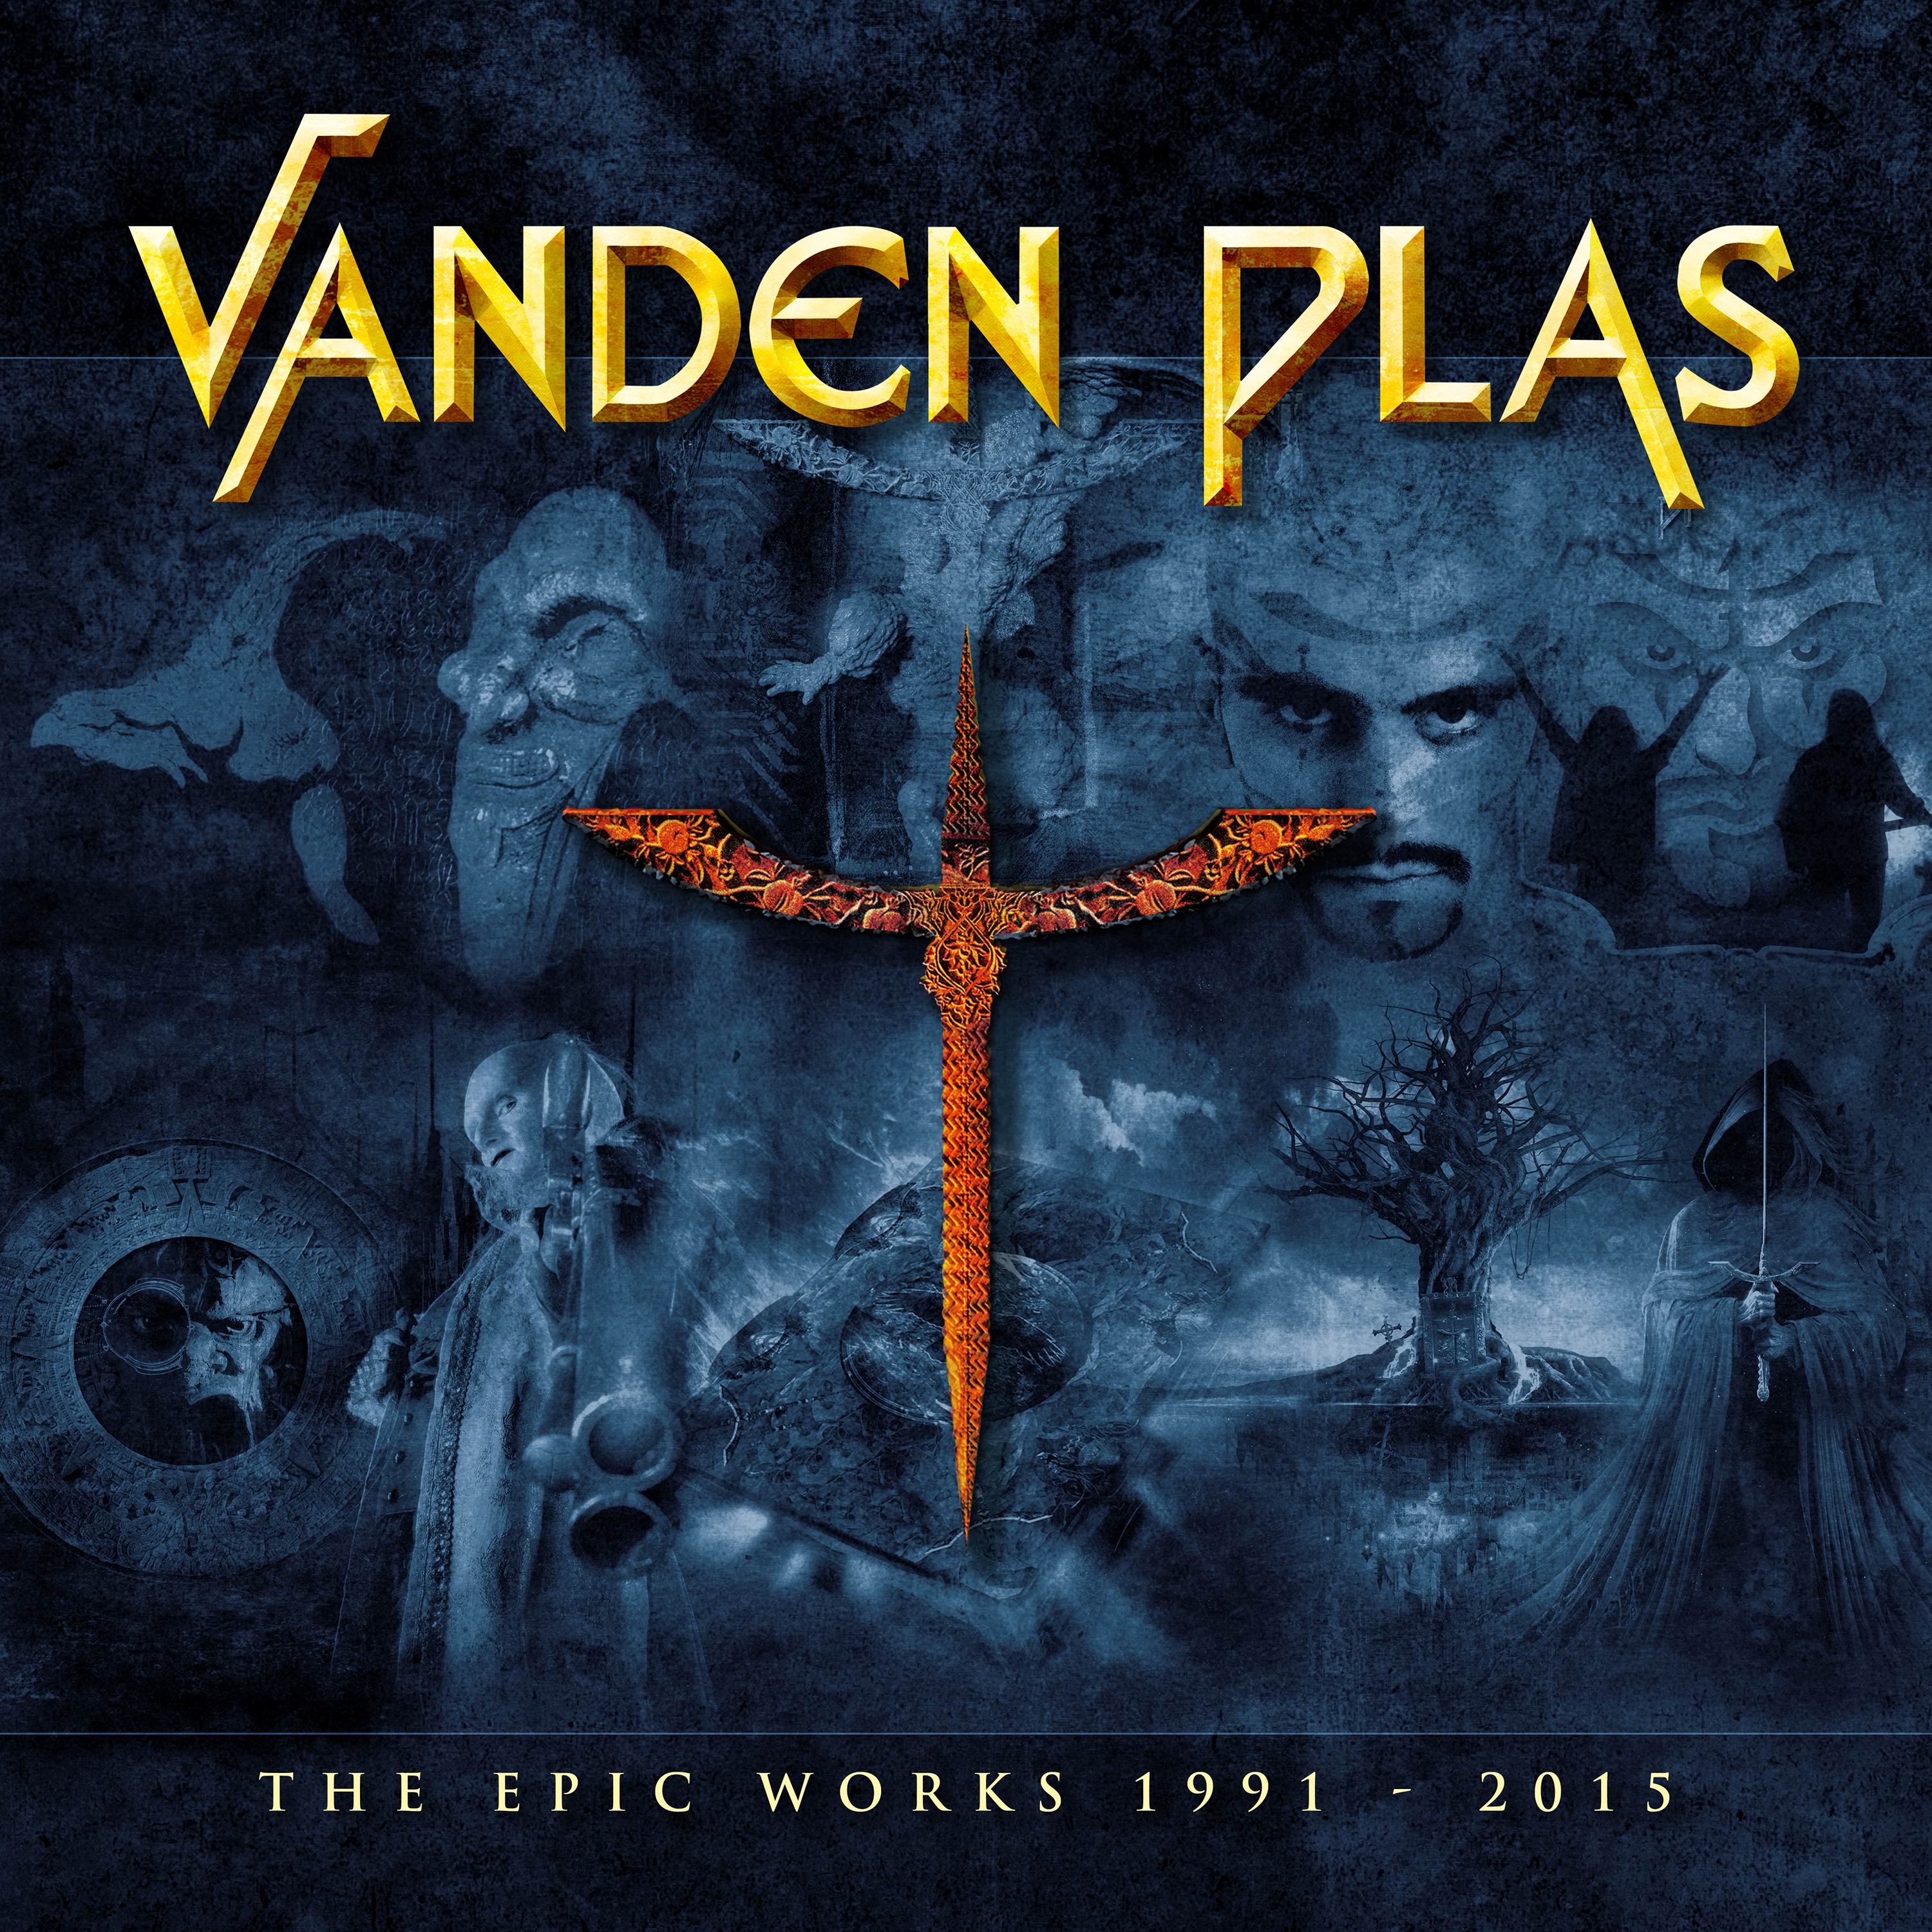 Vanden Plas - “The Epic Works 1991 - 2015 (11CD Box Set)”